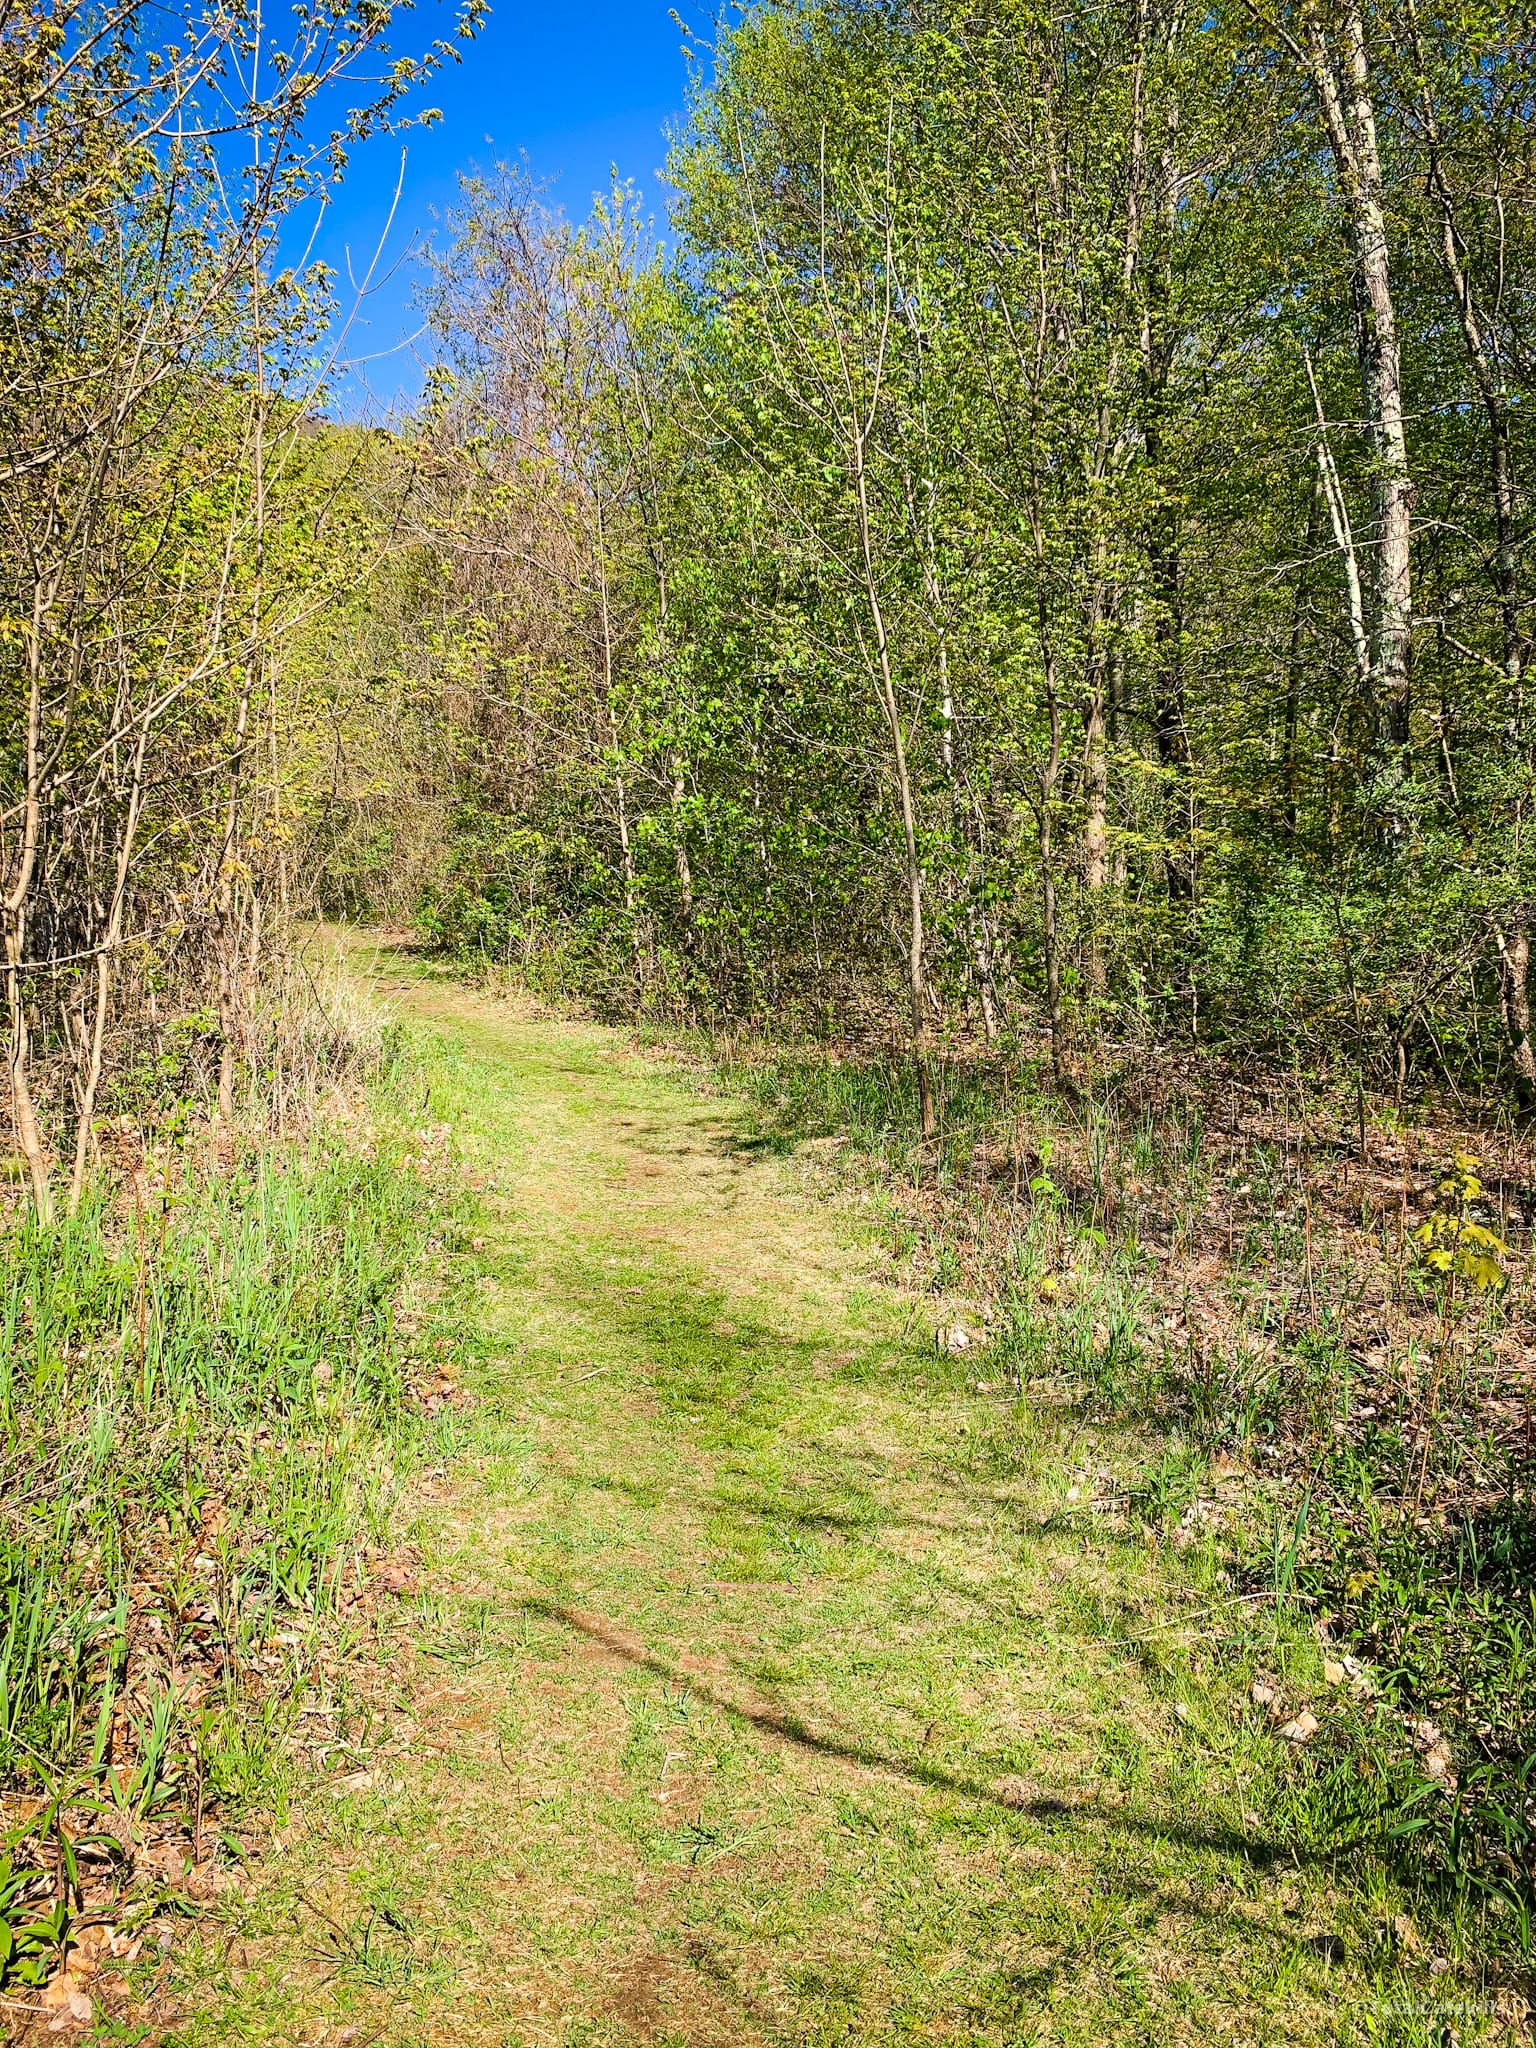 grassy trail